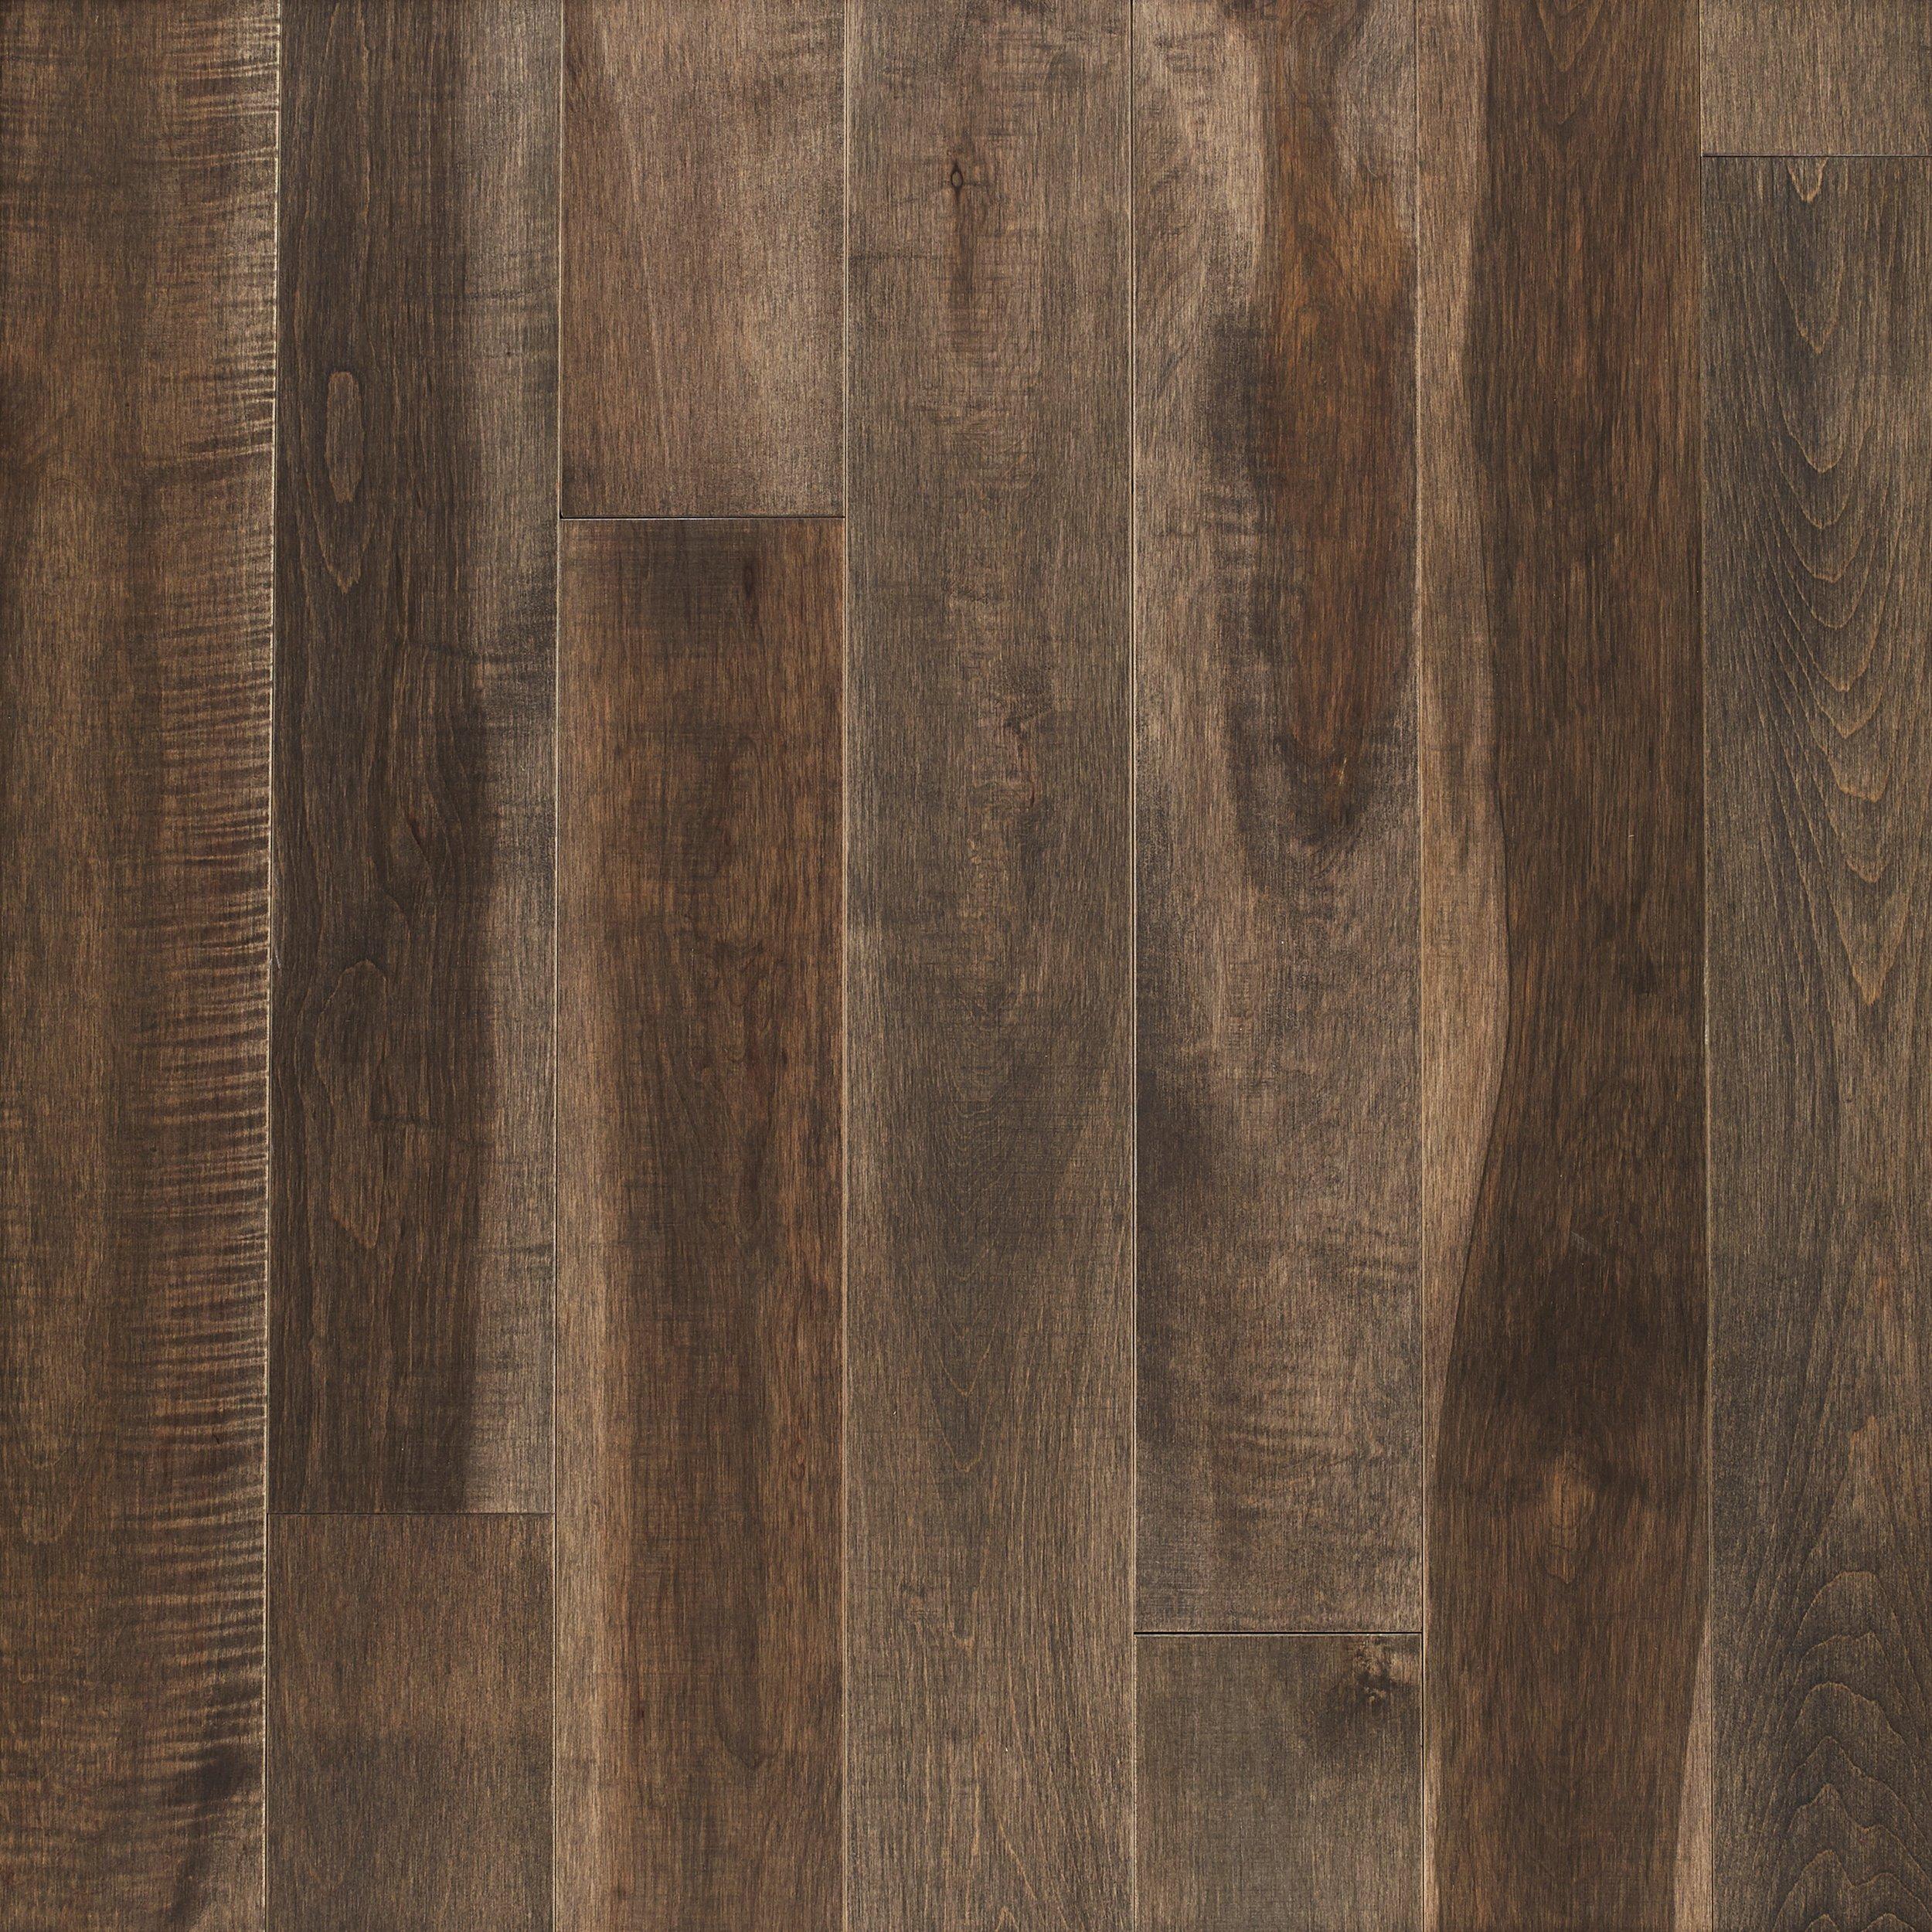 Camden Maple Distressed Solid Hardwood, Rustic Maple Hardwood Flooring